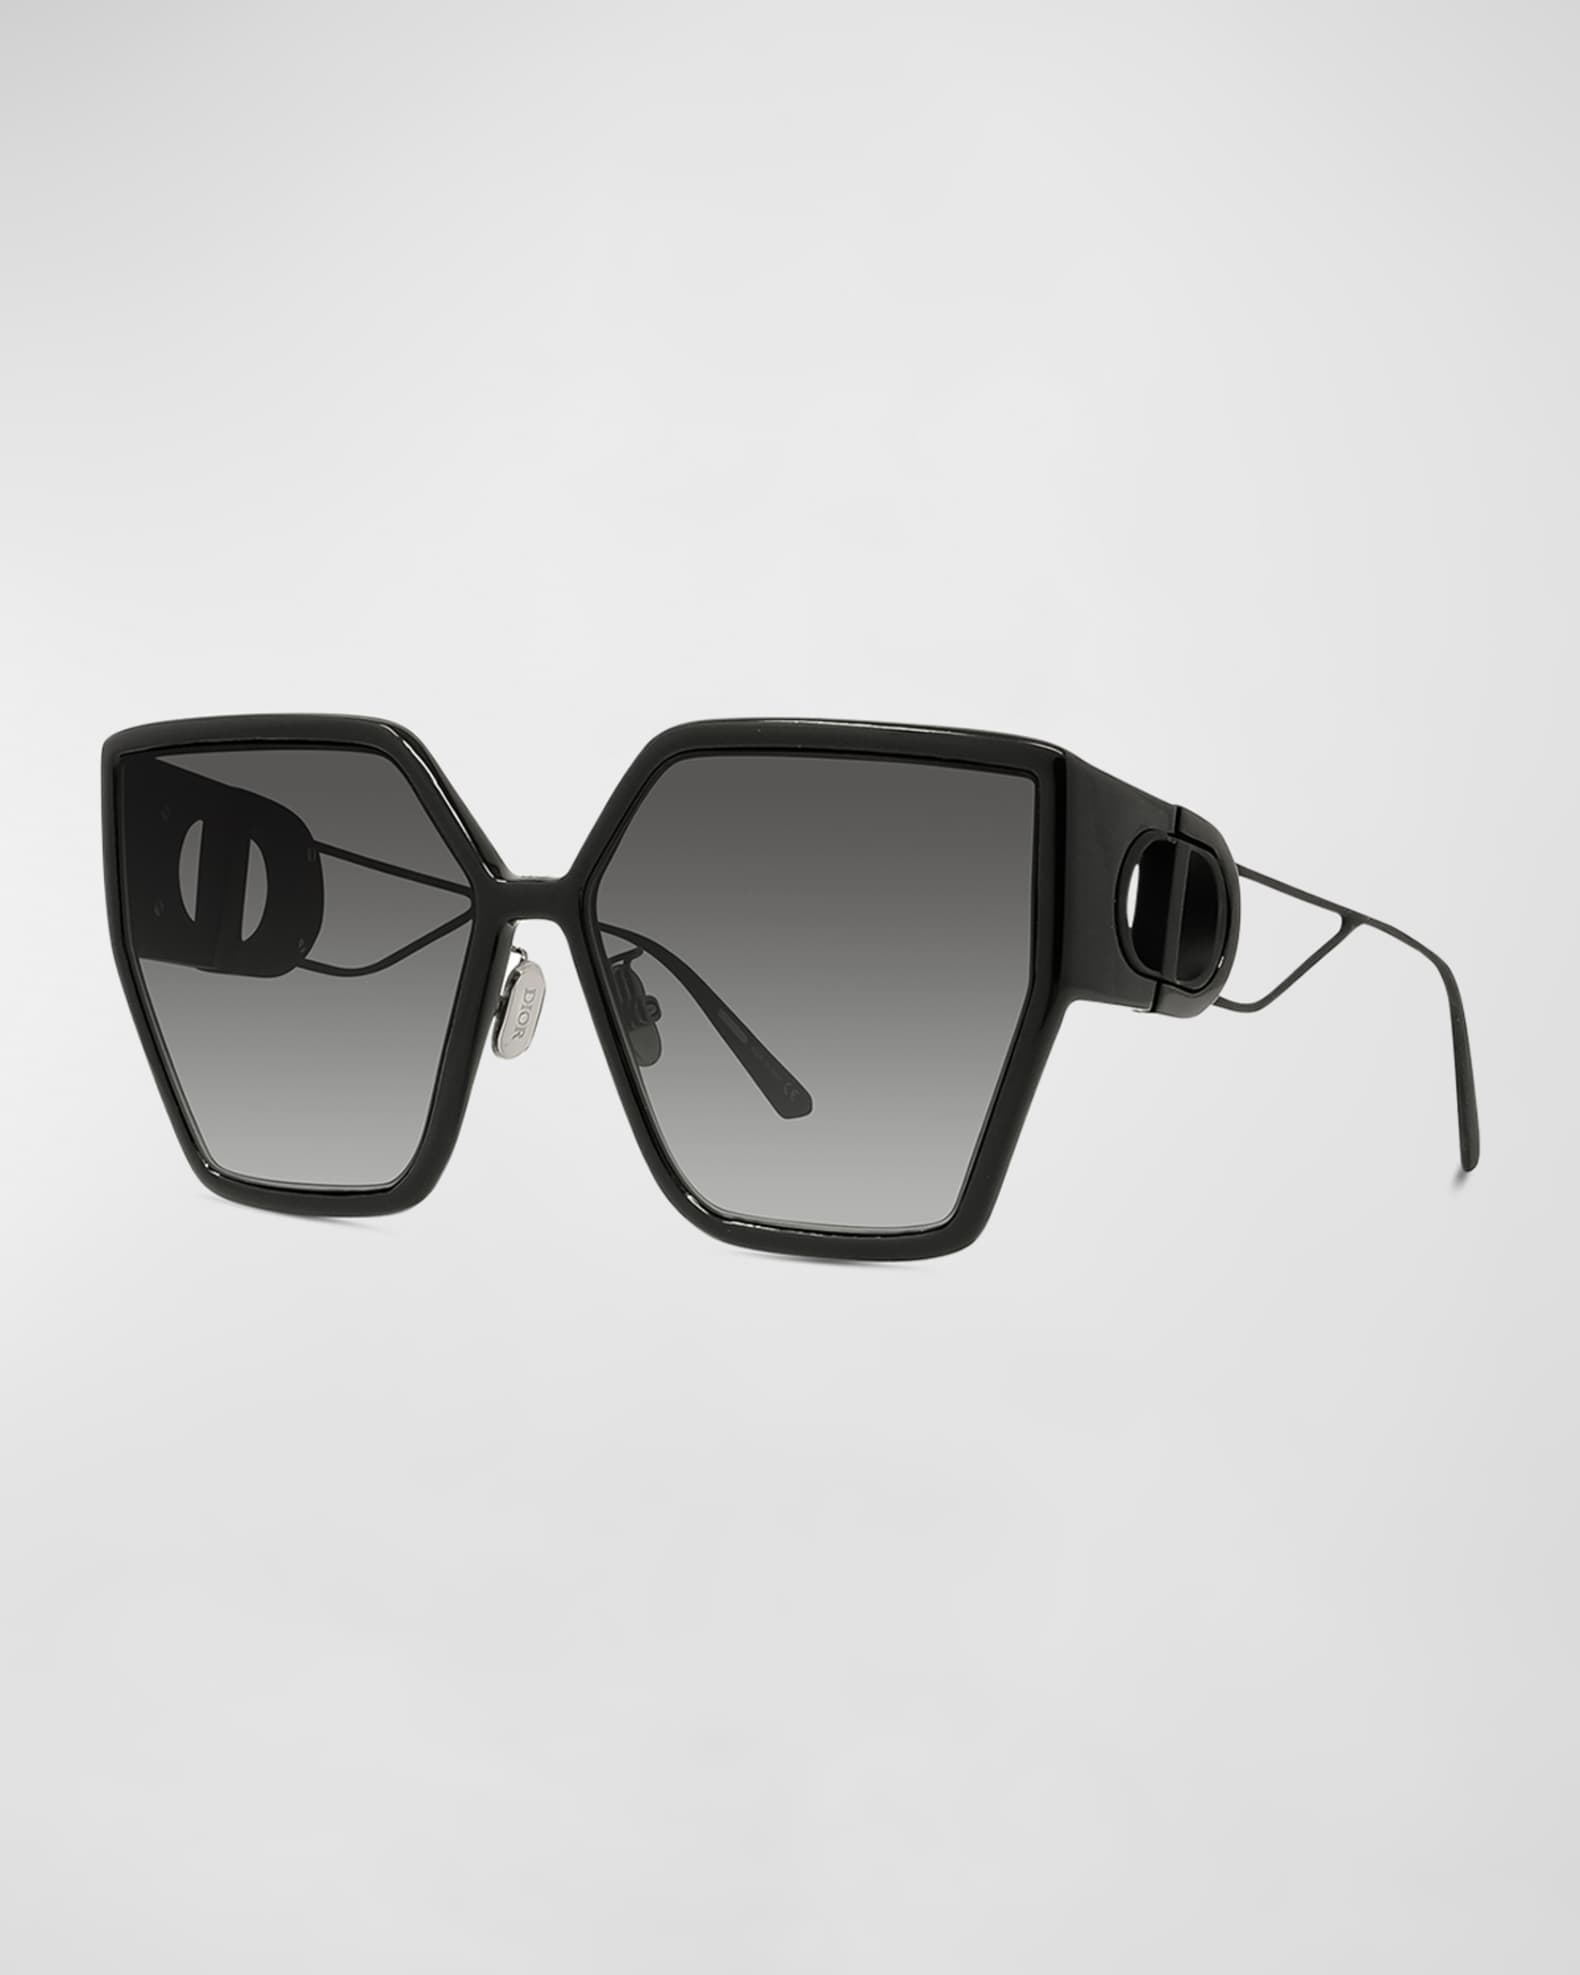 से𝙭𝙮 𝙎𝙪𝙣𝙣𝙞𝙚𝙨 🤩😎 🕶 all new sunglasses - Urban